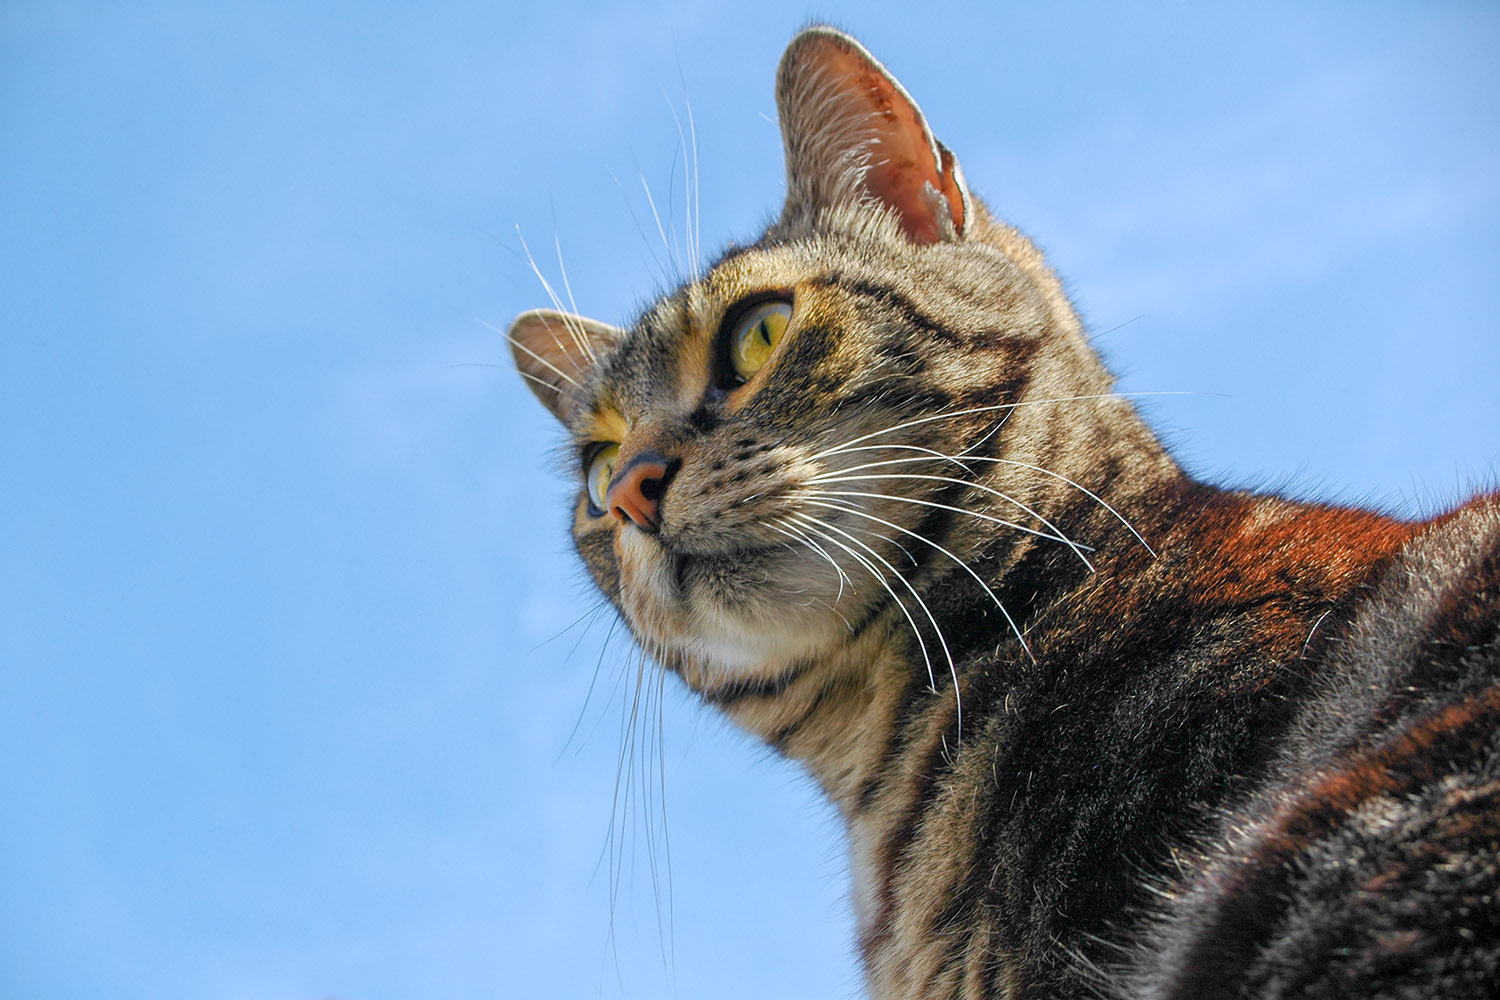 Moïse, my favorite neighborhood cat when we lived in Valbonne